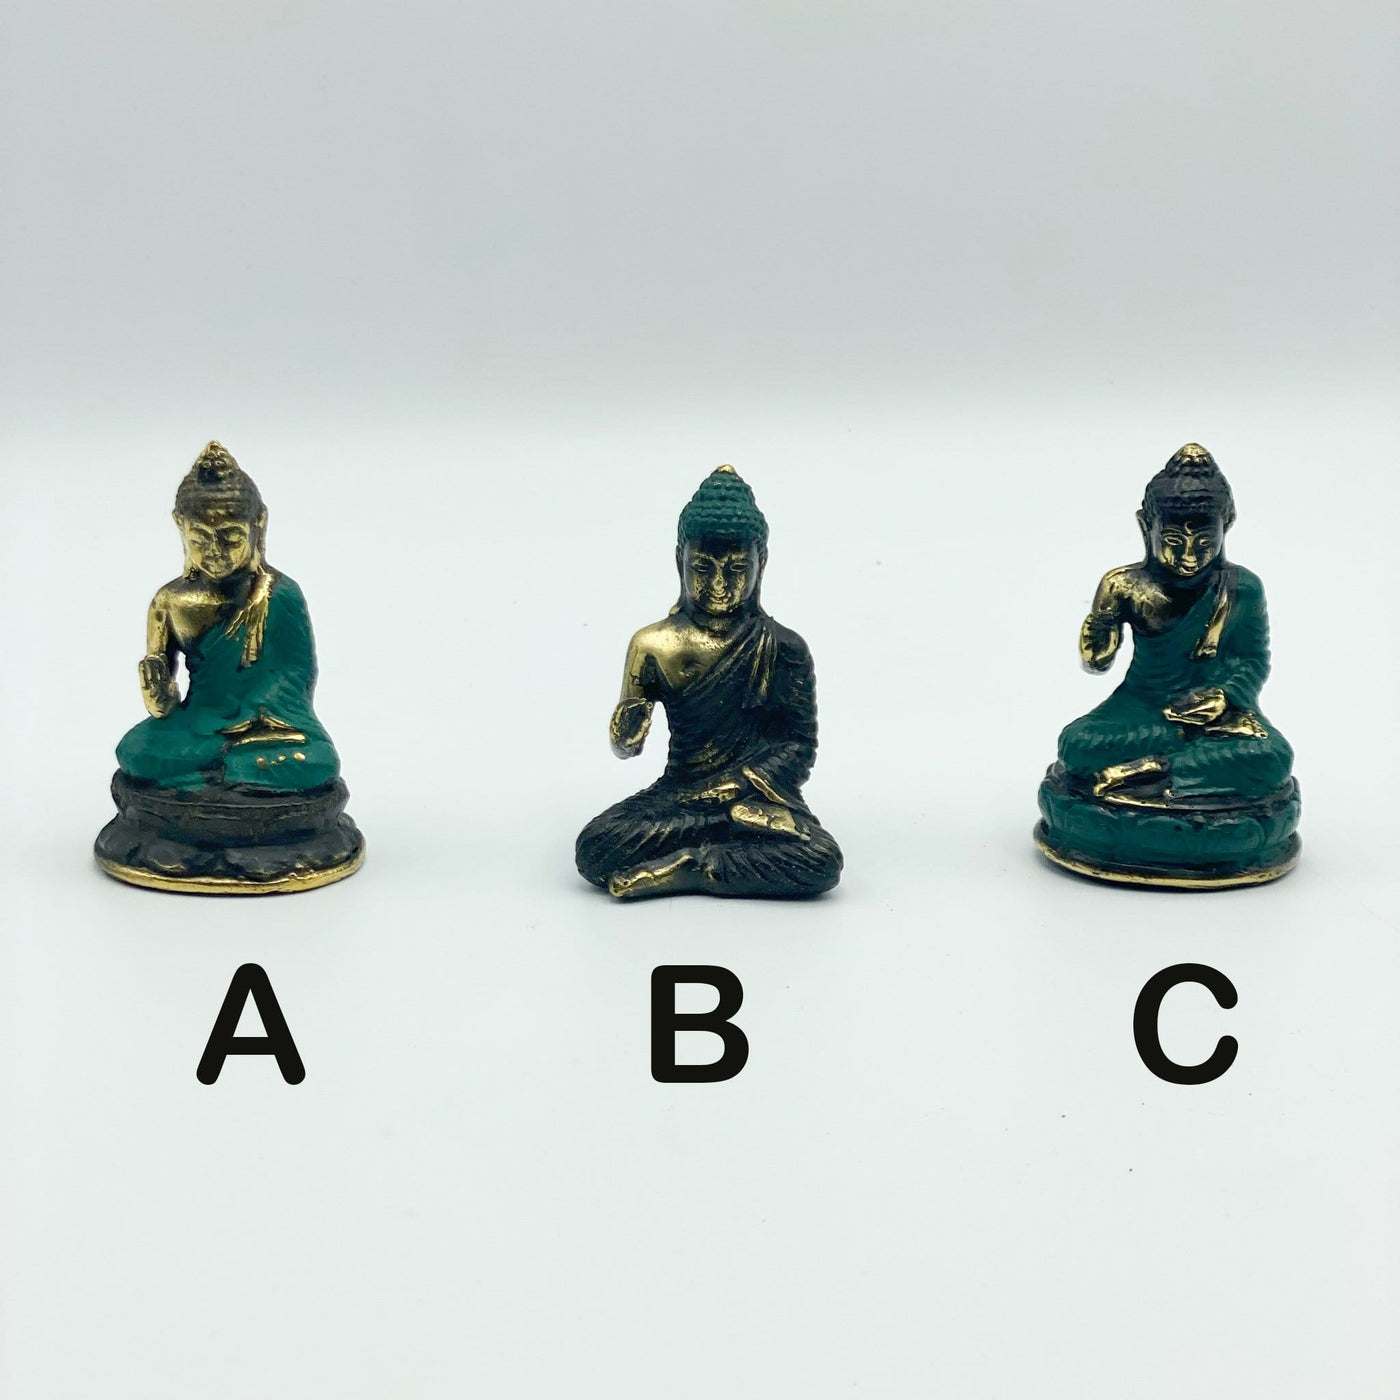 3 variations of Buddha mini statue on white background